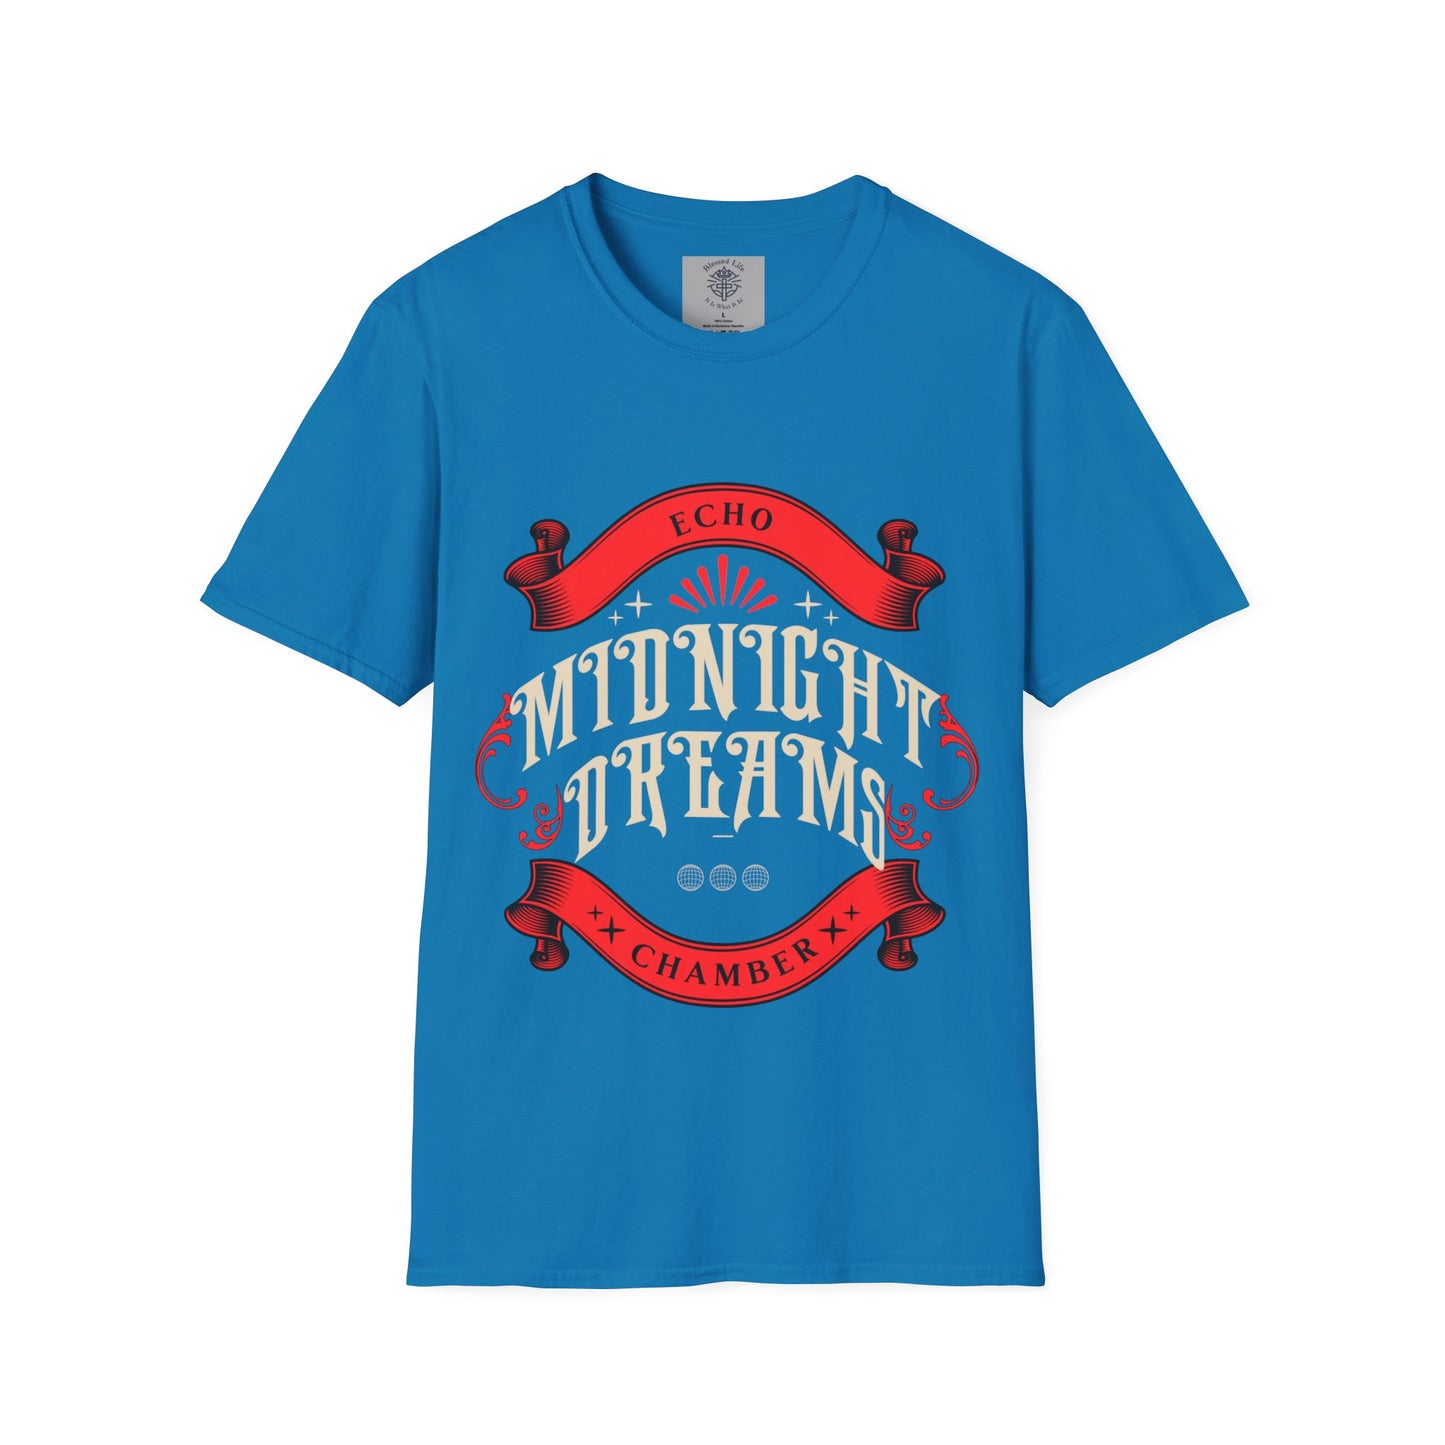 Midnight Dreams Unisex Softstyle T-Shirt